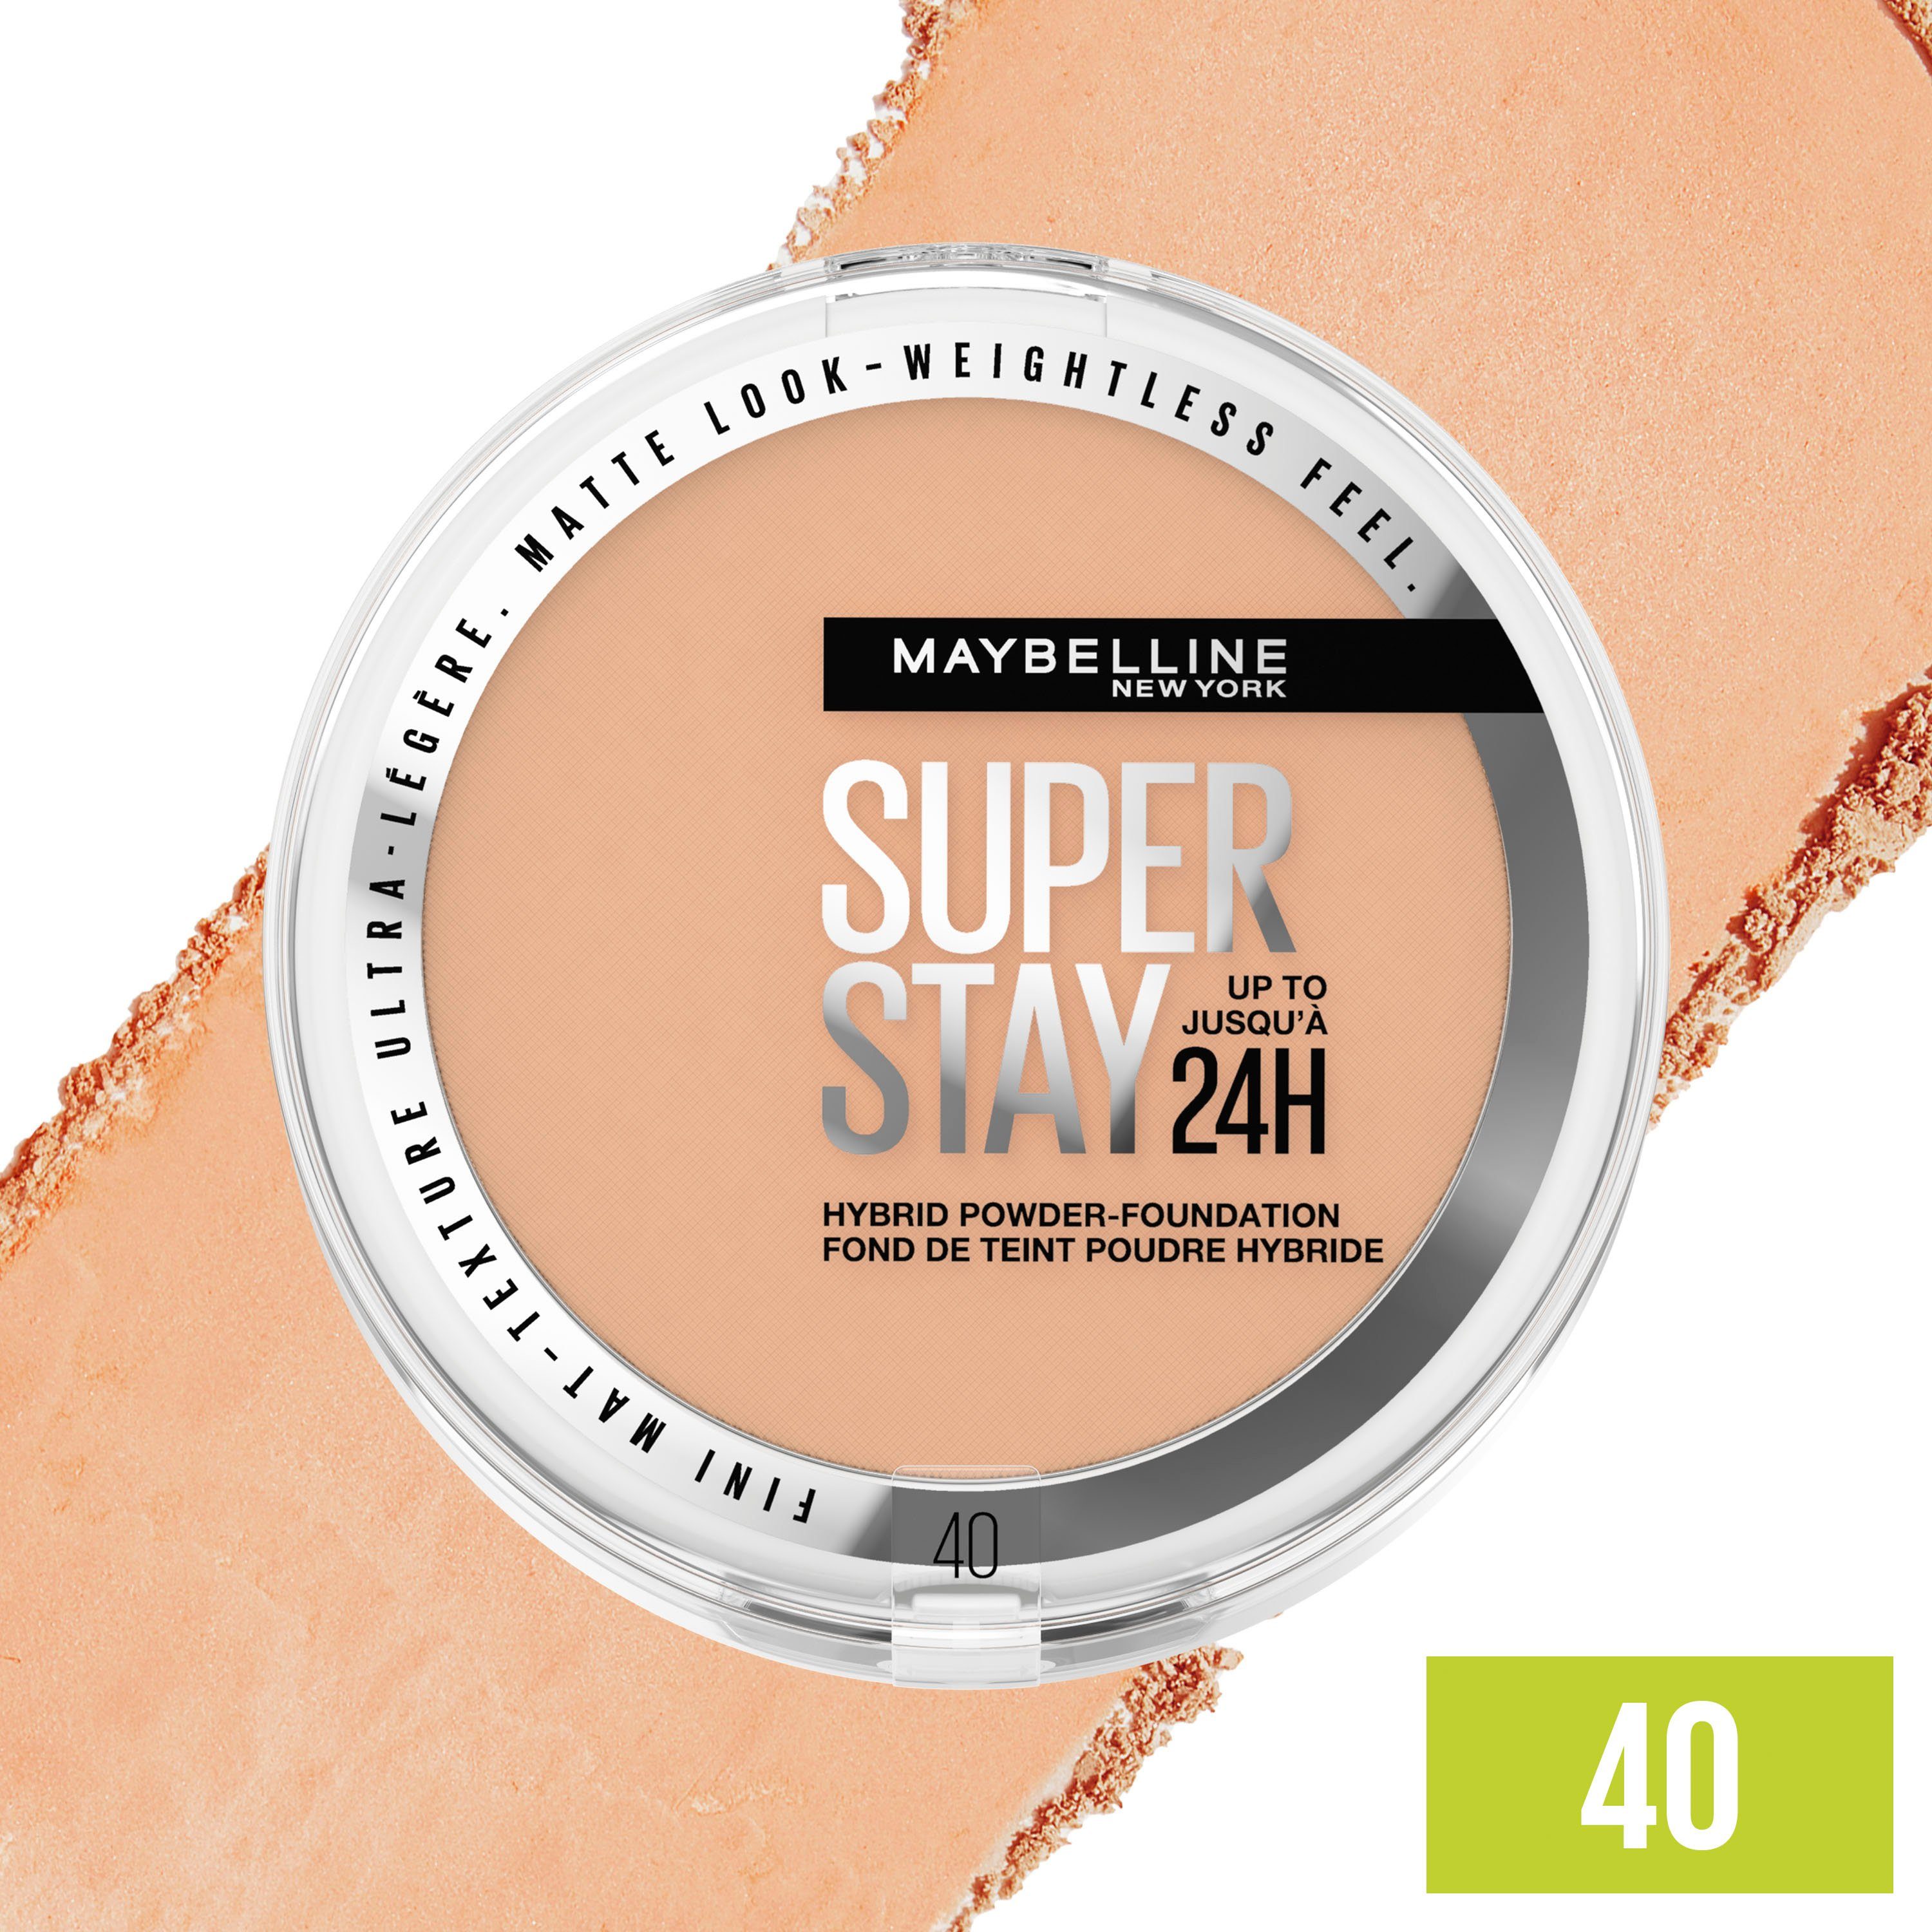 Stay Super Make-Up MAYBELLINE Hybrides Maybelline New NEW YORK York Puder Foundation